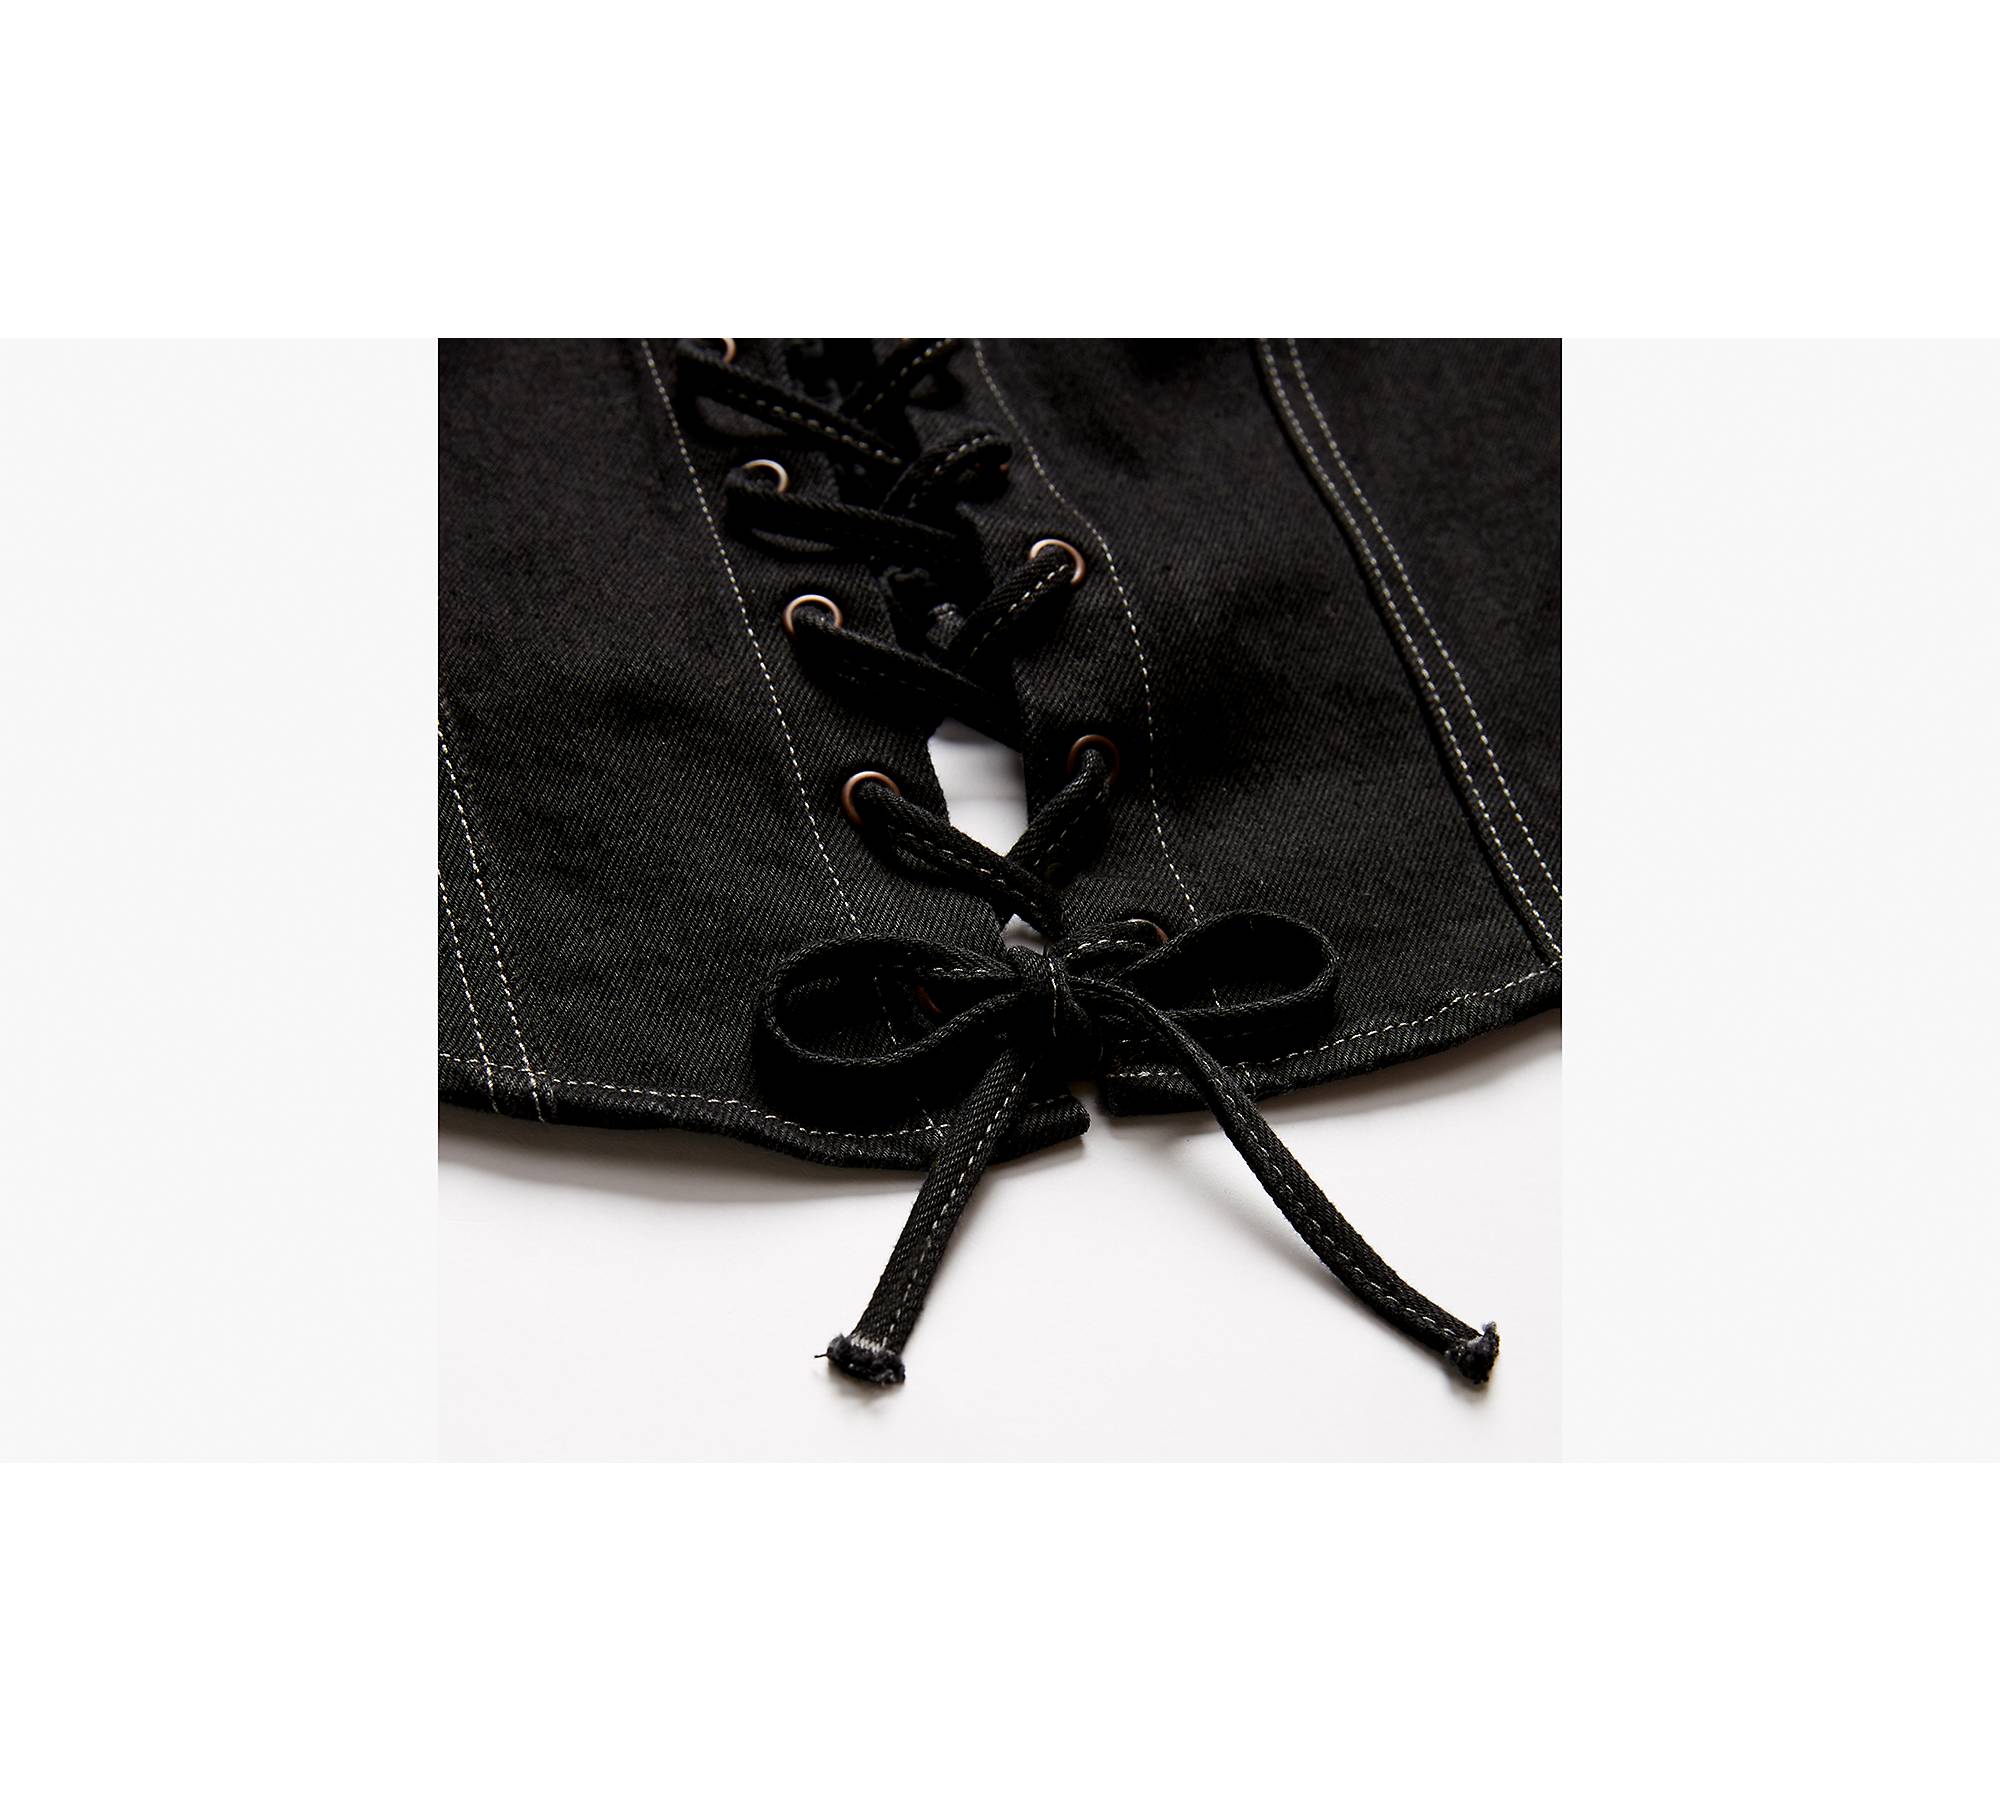 Adult Waist Cincher Corset with Lace Up & Zipper, Black, One Size